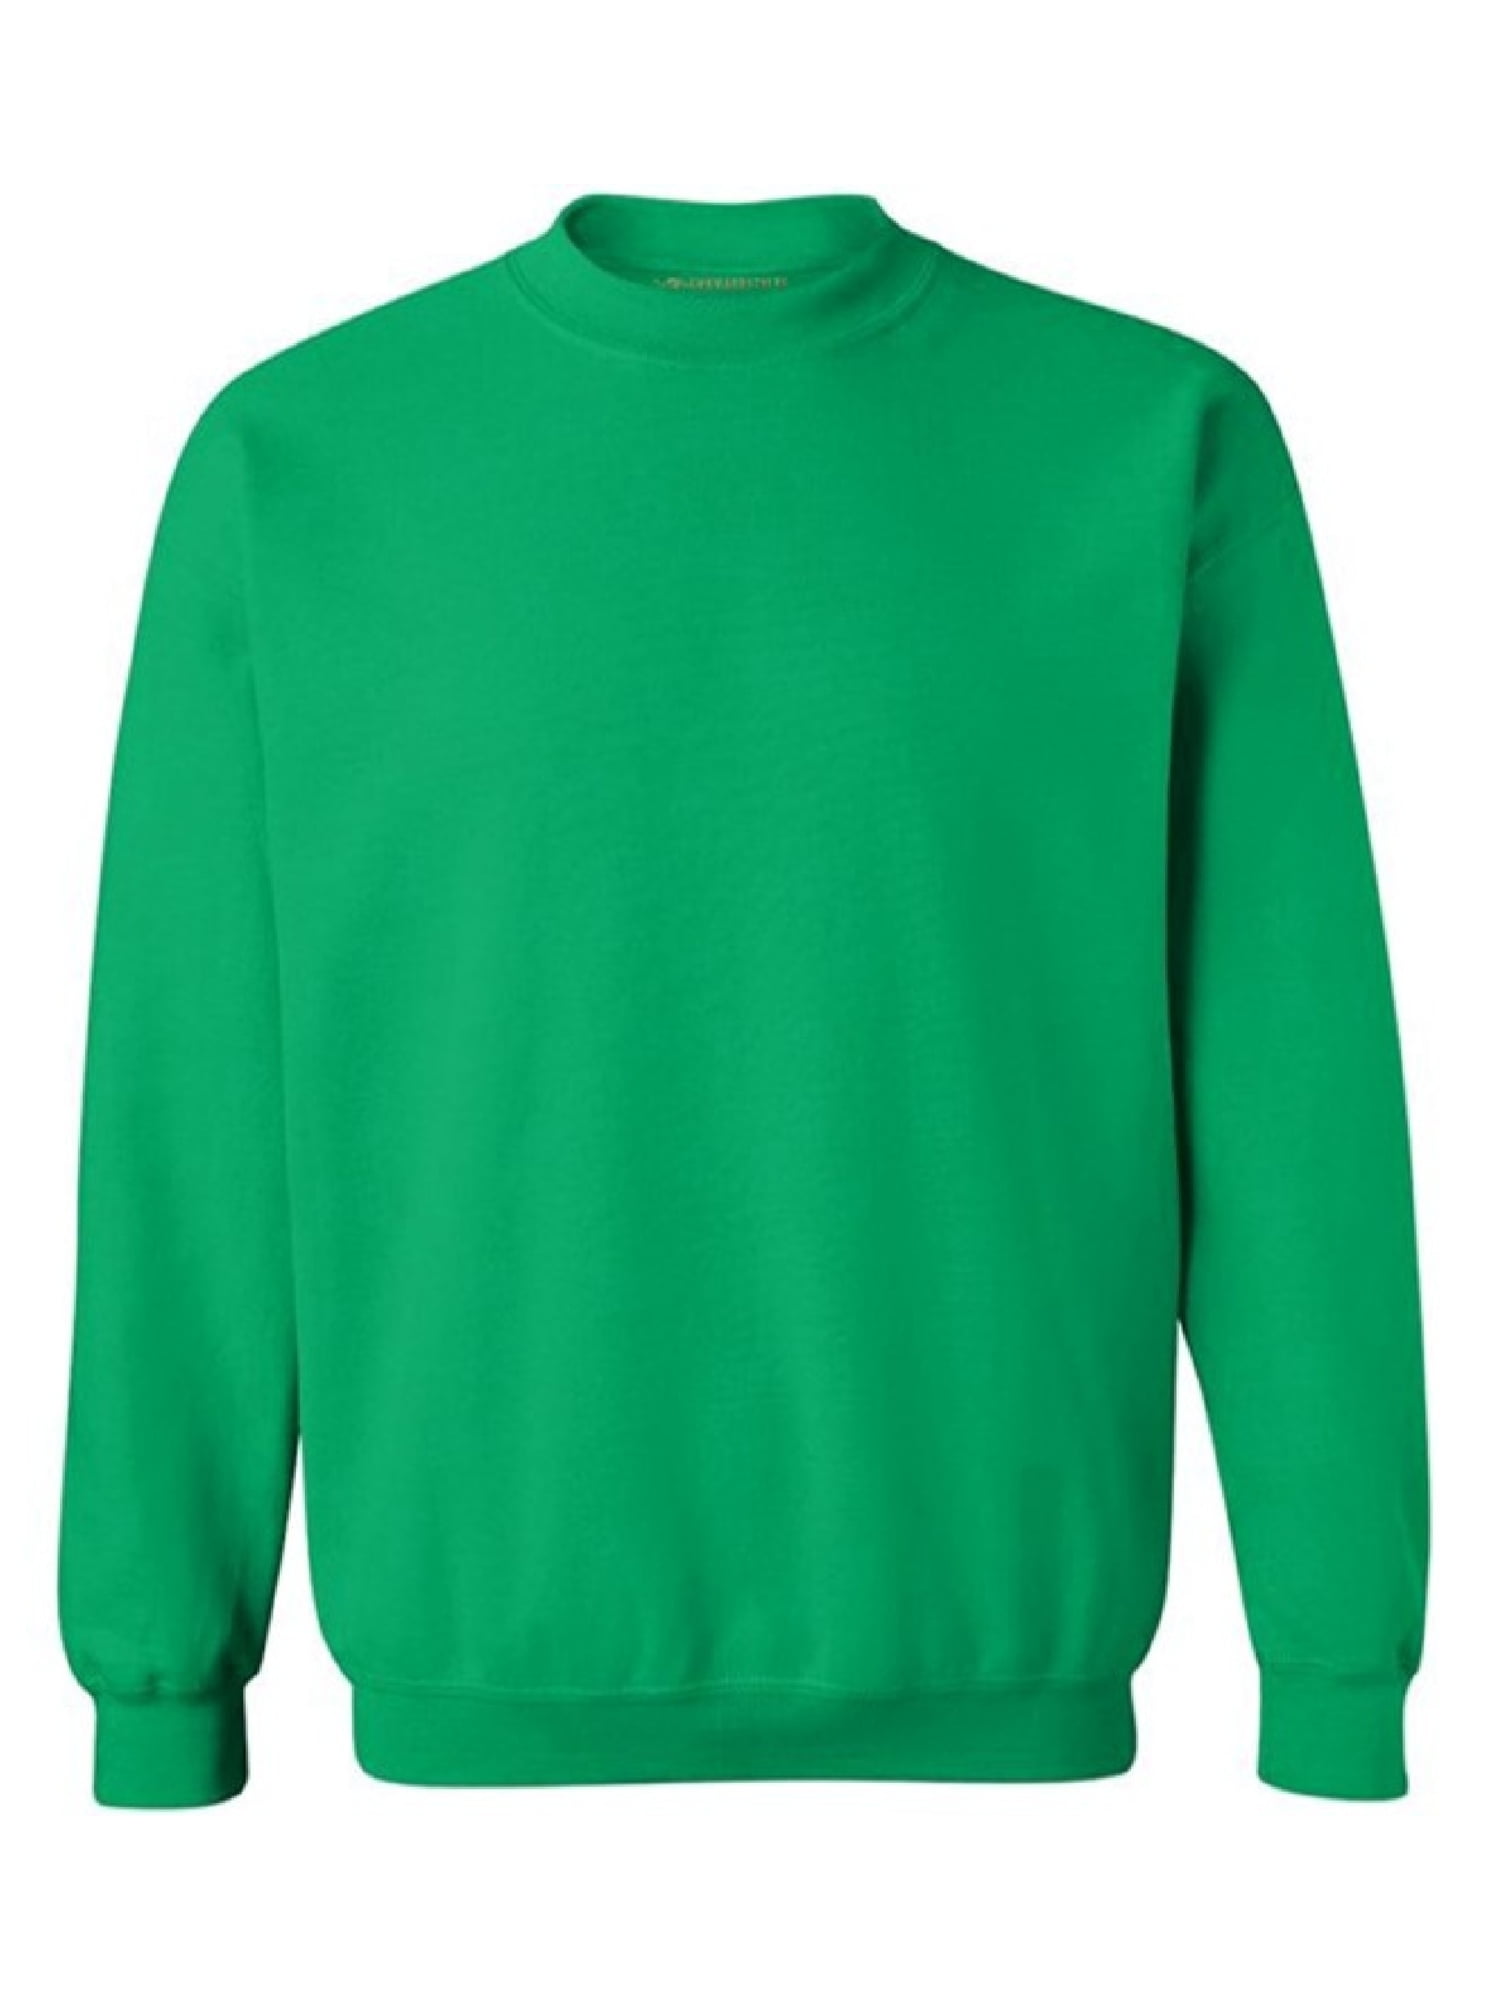 Kids School Jumper Sweater Rohi Unisex Crew Neck Plain Sweatshirt Plain Fleece Sweatshirt